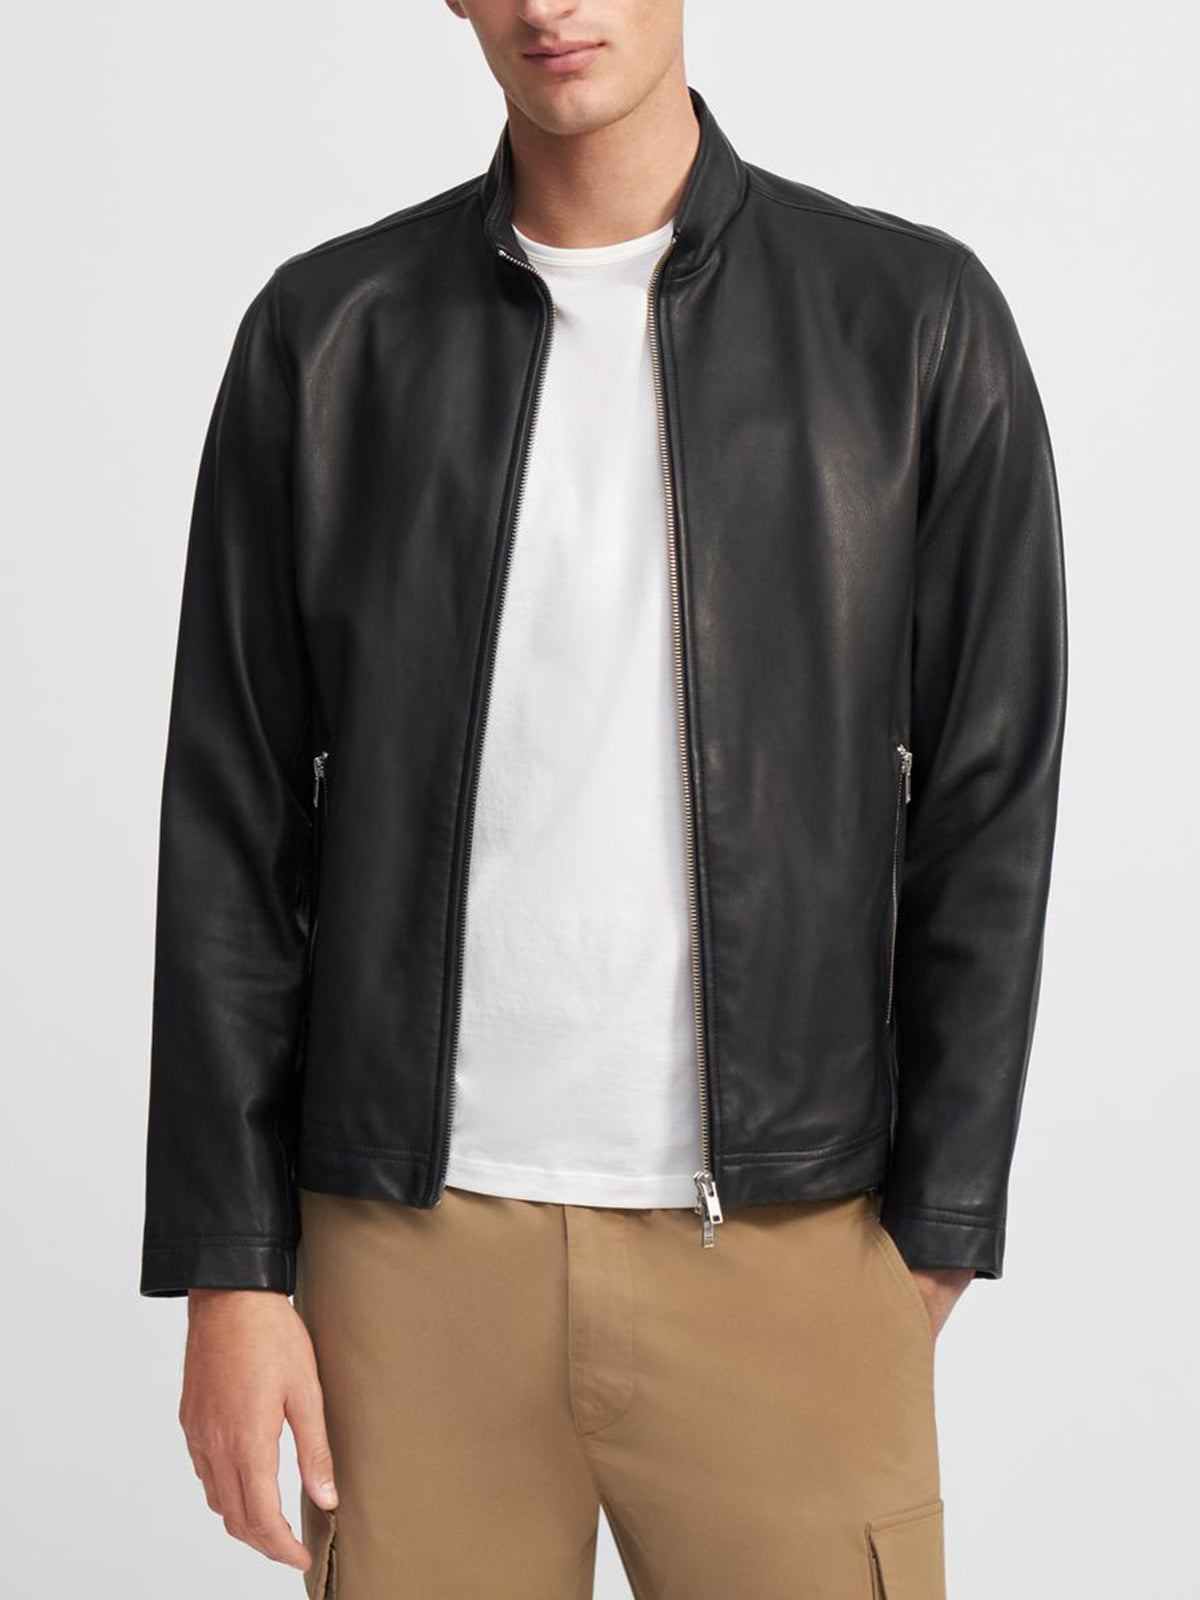 Mens Slim Fit Black Round Collar Leather Jacket | boneshia | Reviews on ...